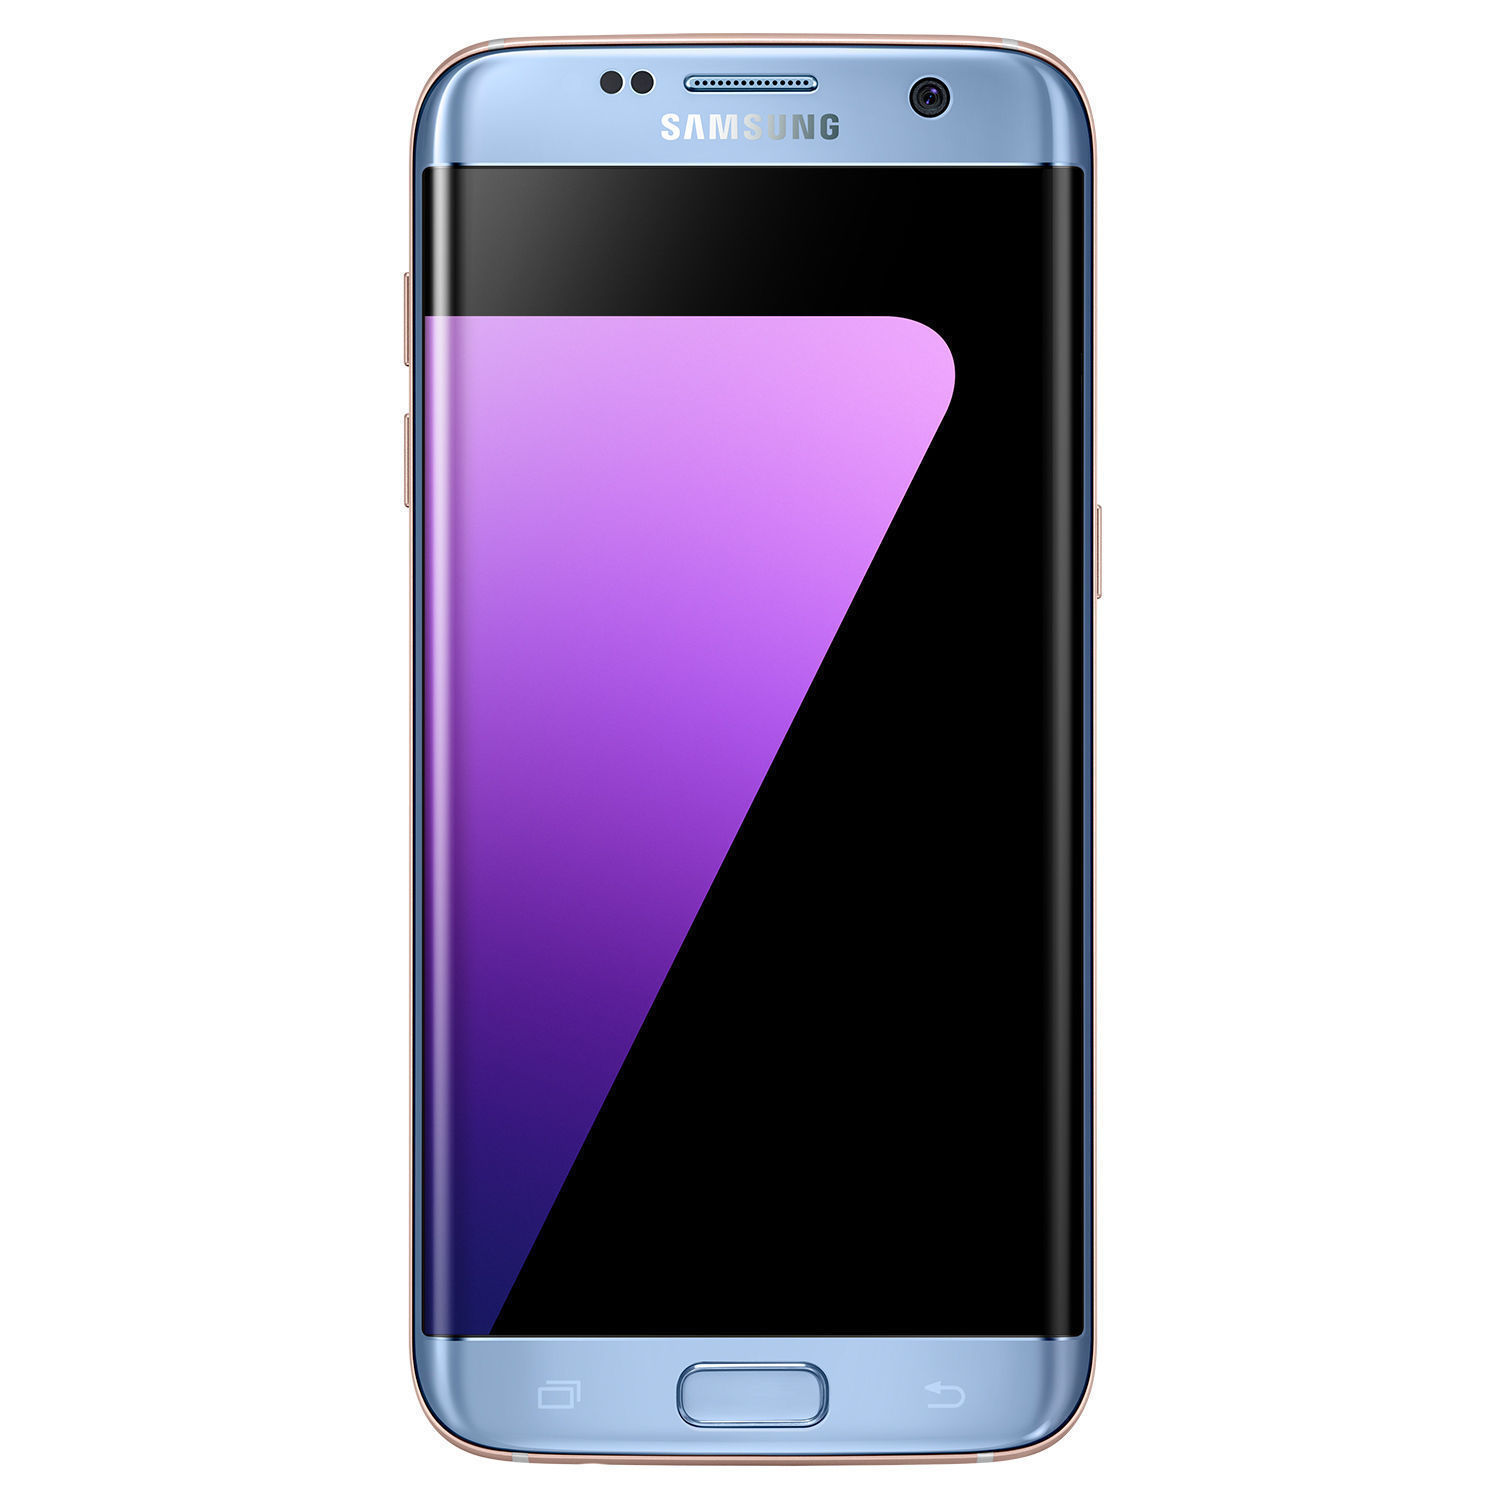 Samsung Galaxy S7 edge G935F LTE 32 GB * NeuWare * OVP *